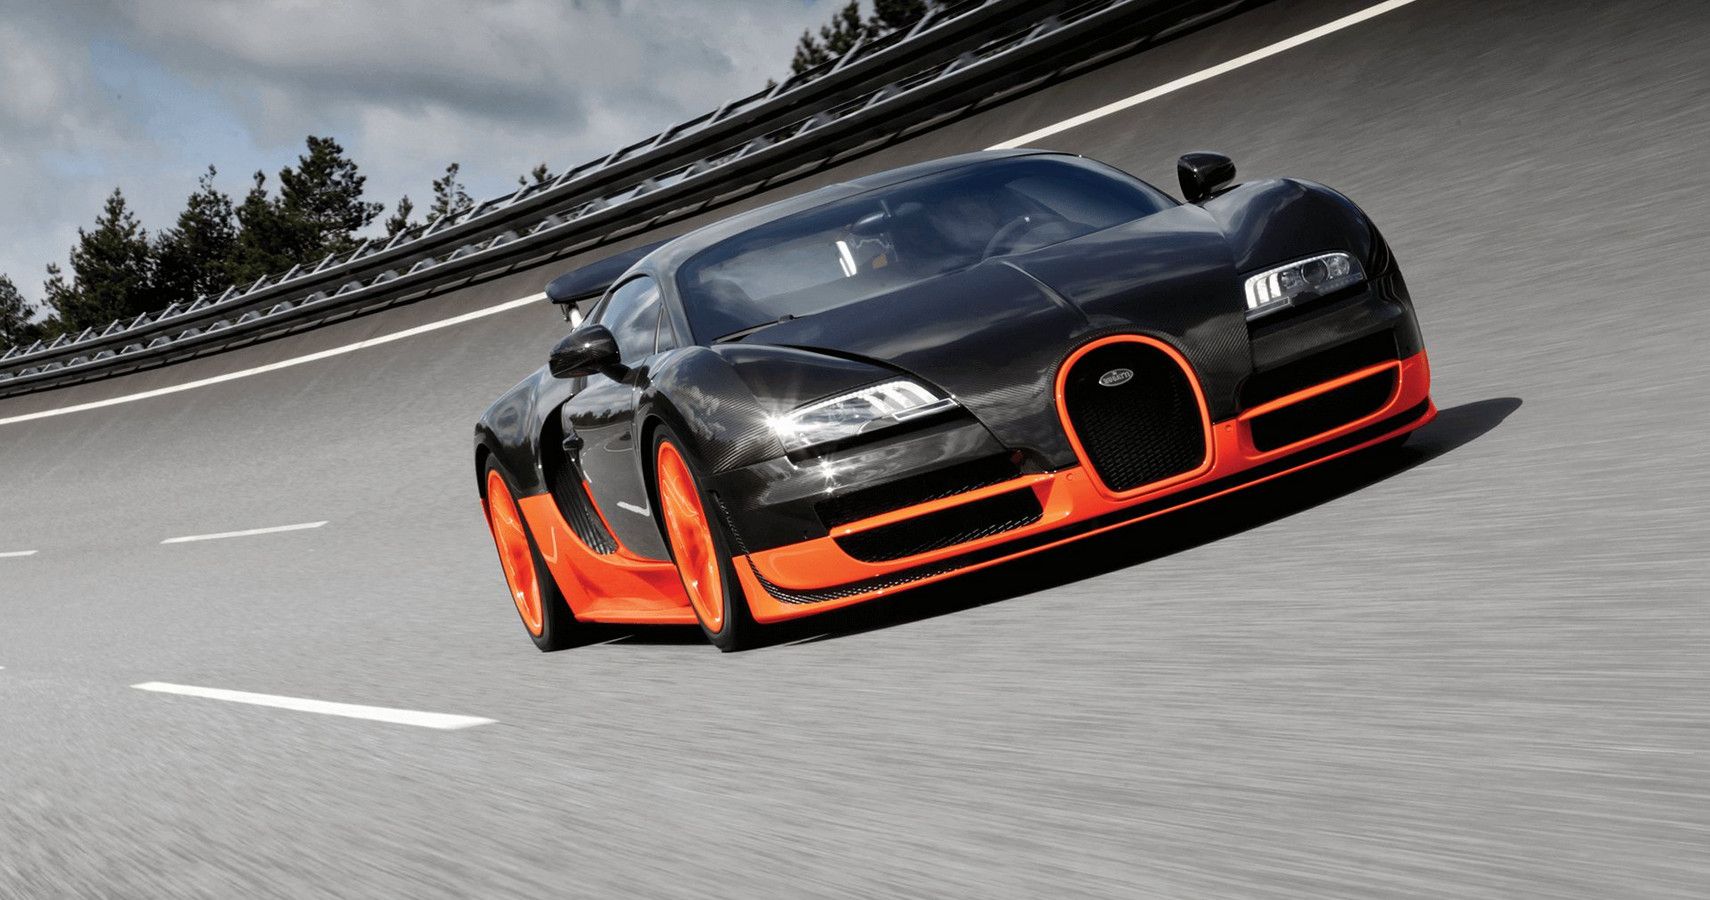 Black and orange Bugatti Veyron super sport front